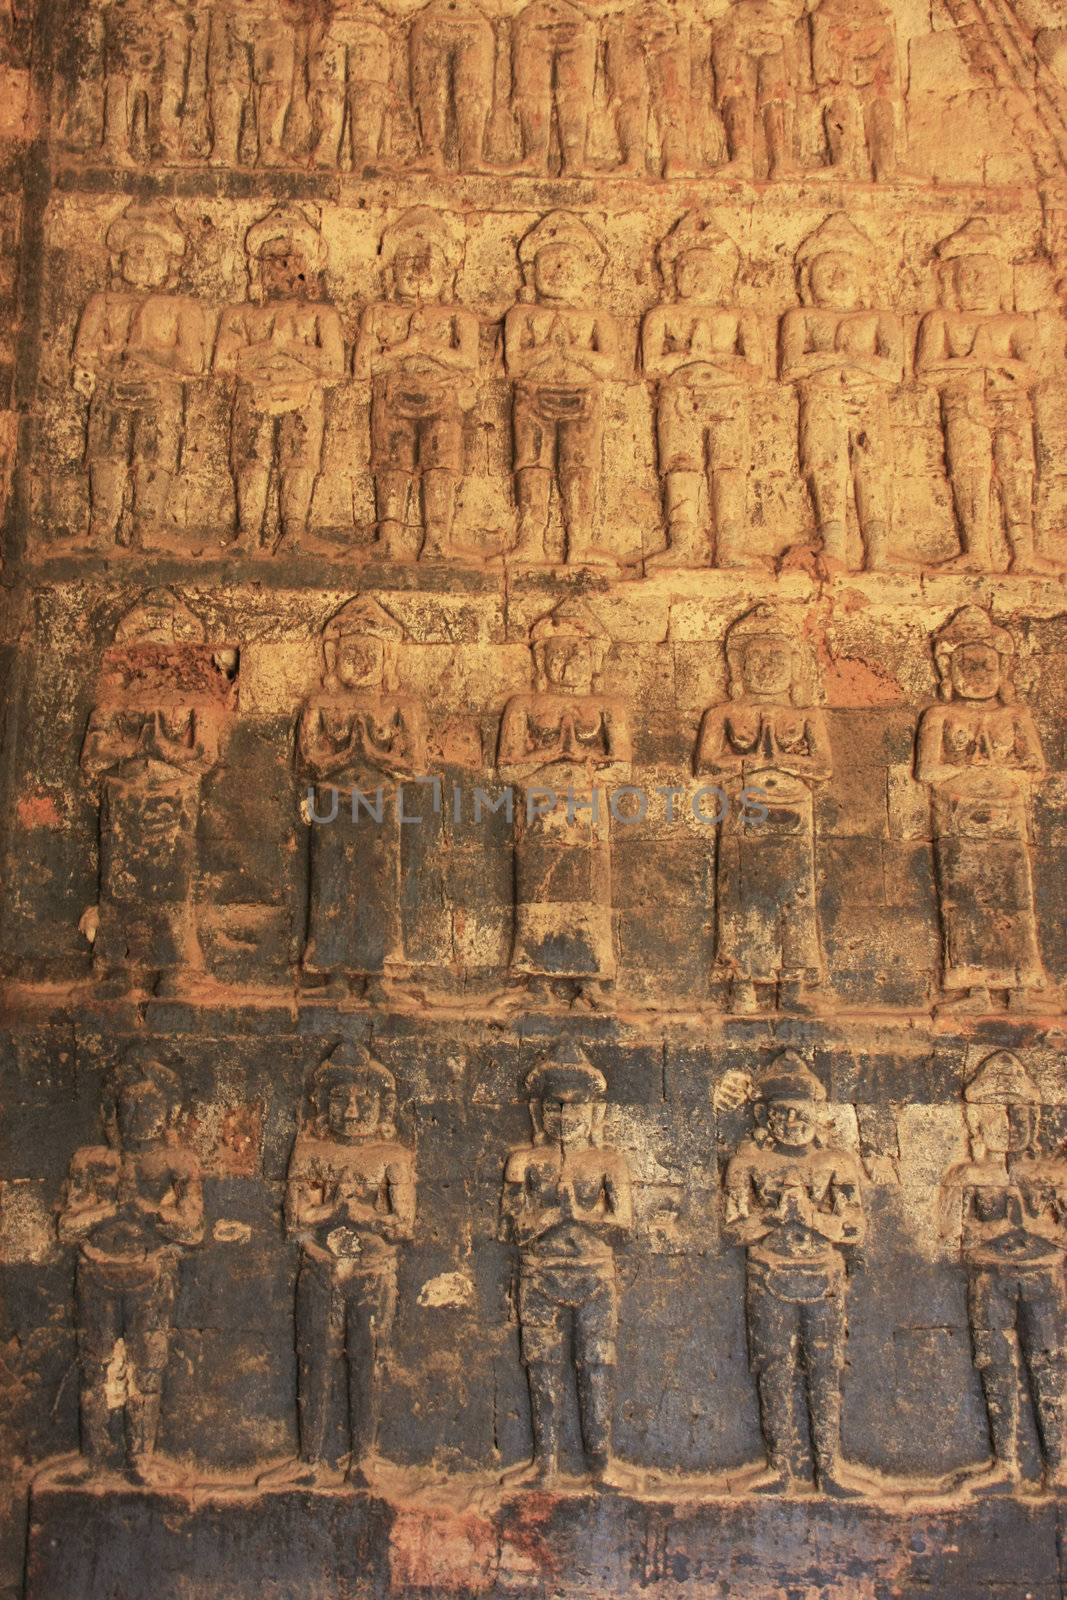 Decorative interior wall carvings, Prasat Kravan temple, Angkor area, Cambodia